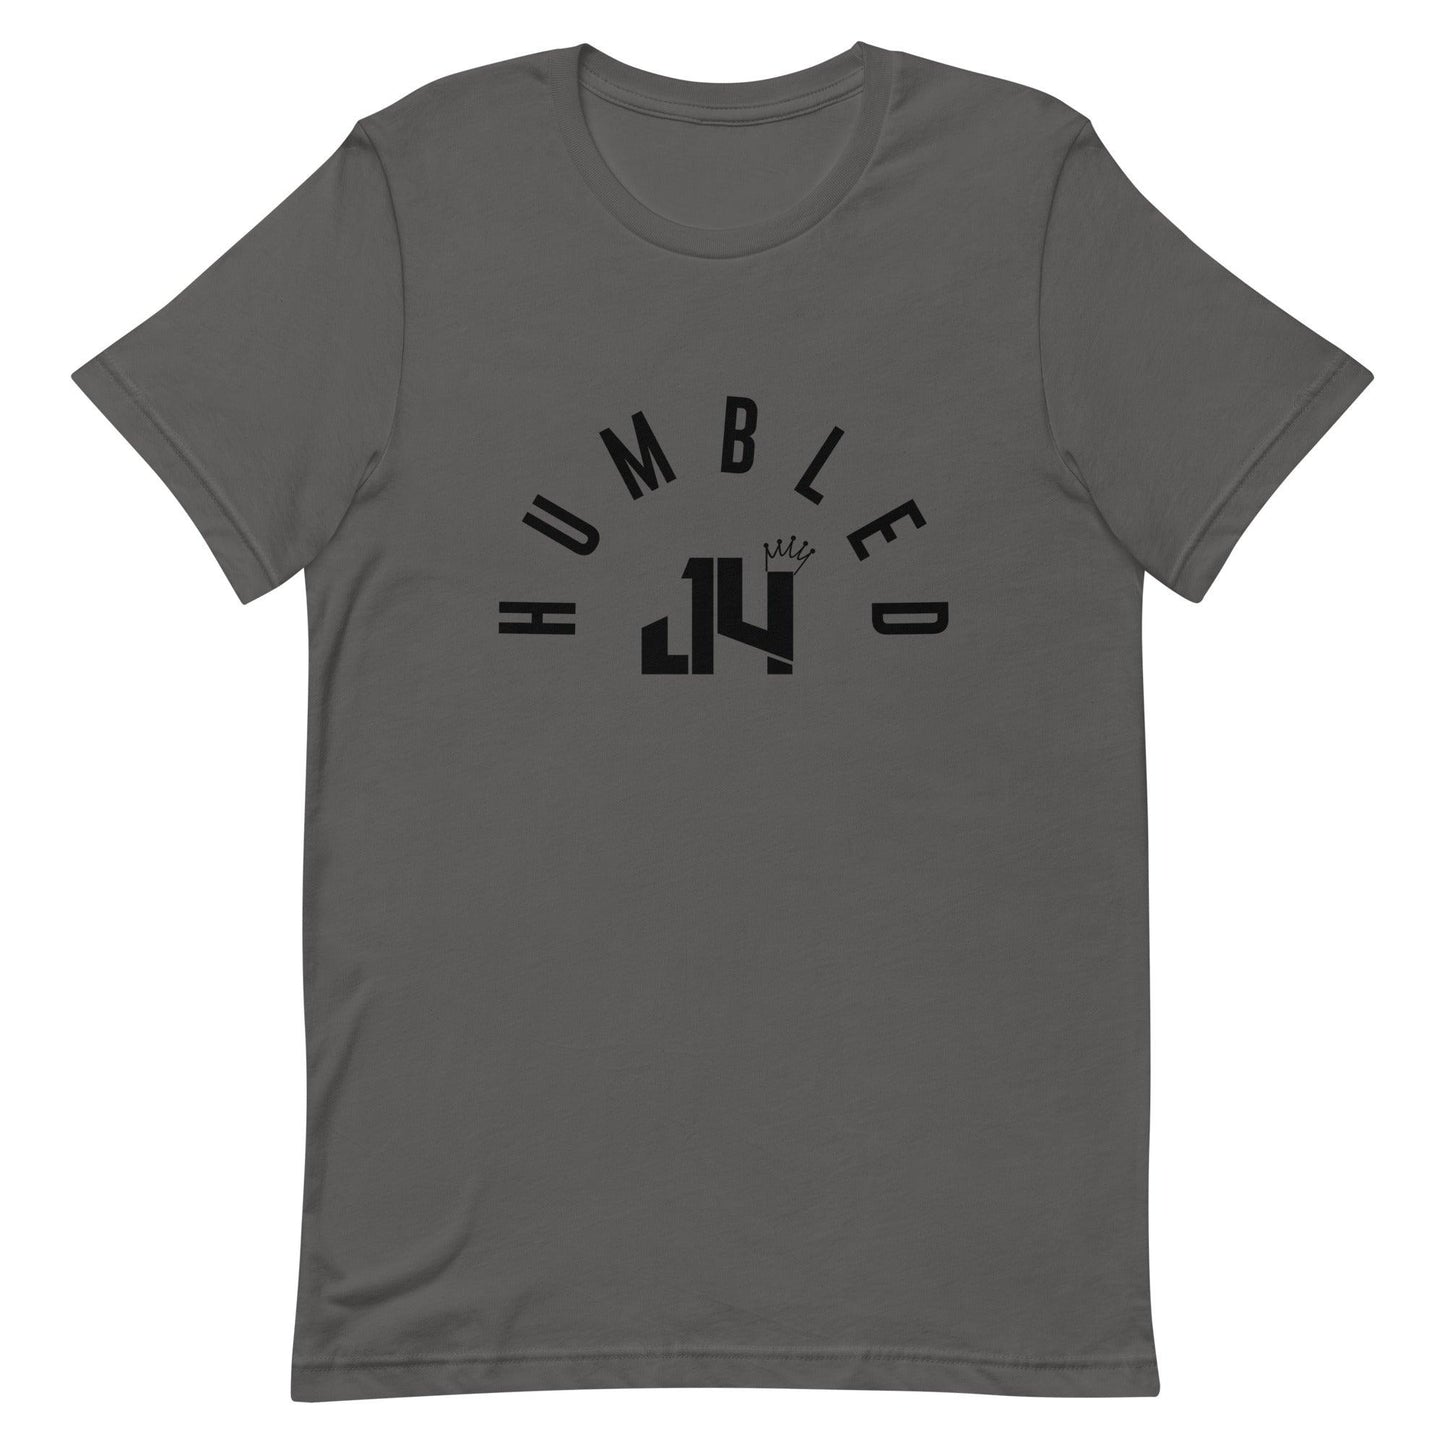 Jeff Foreman “Humbled” t-shirt - Fan Arch